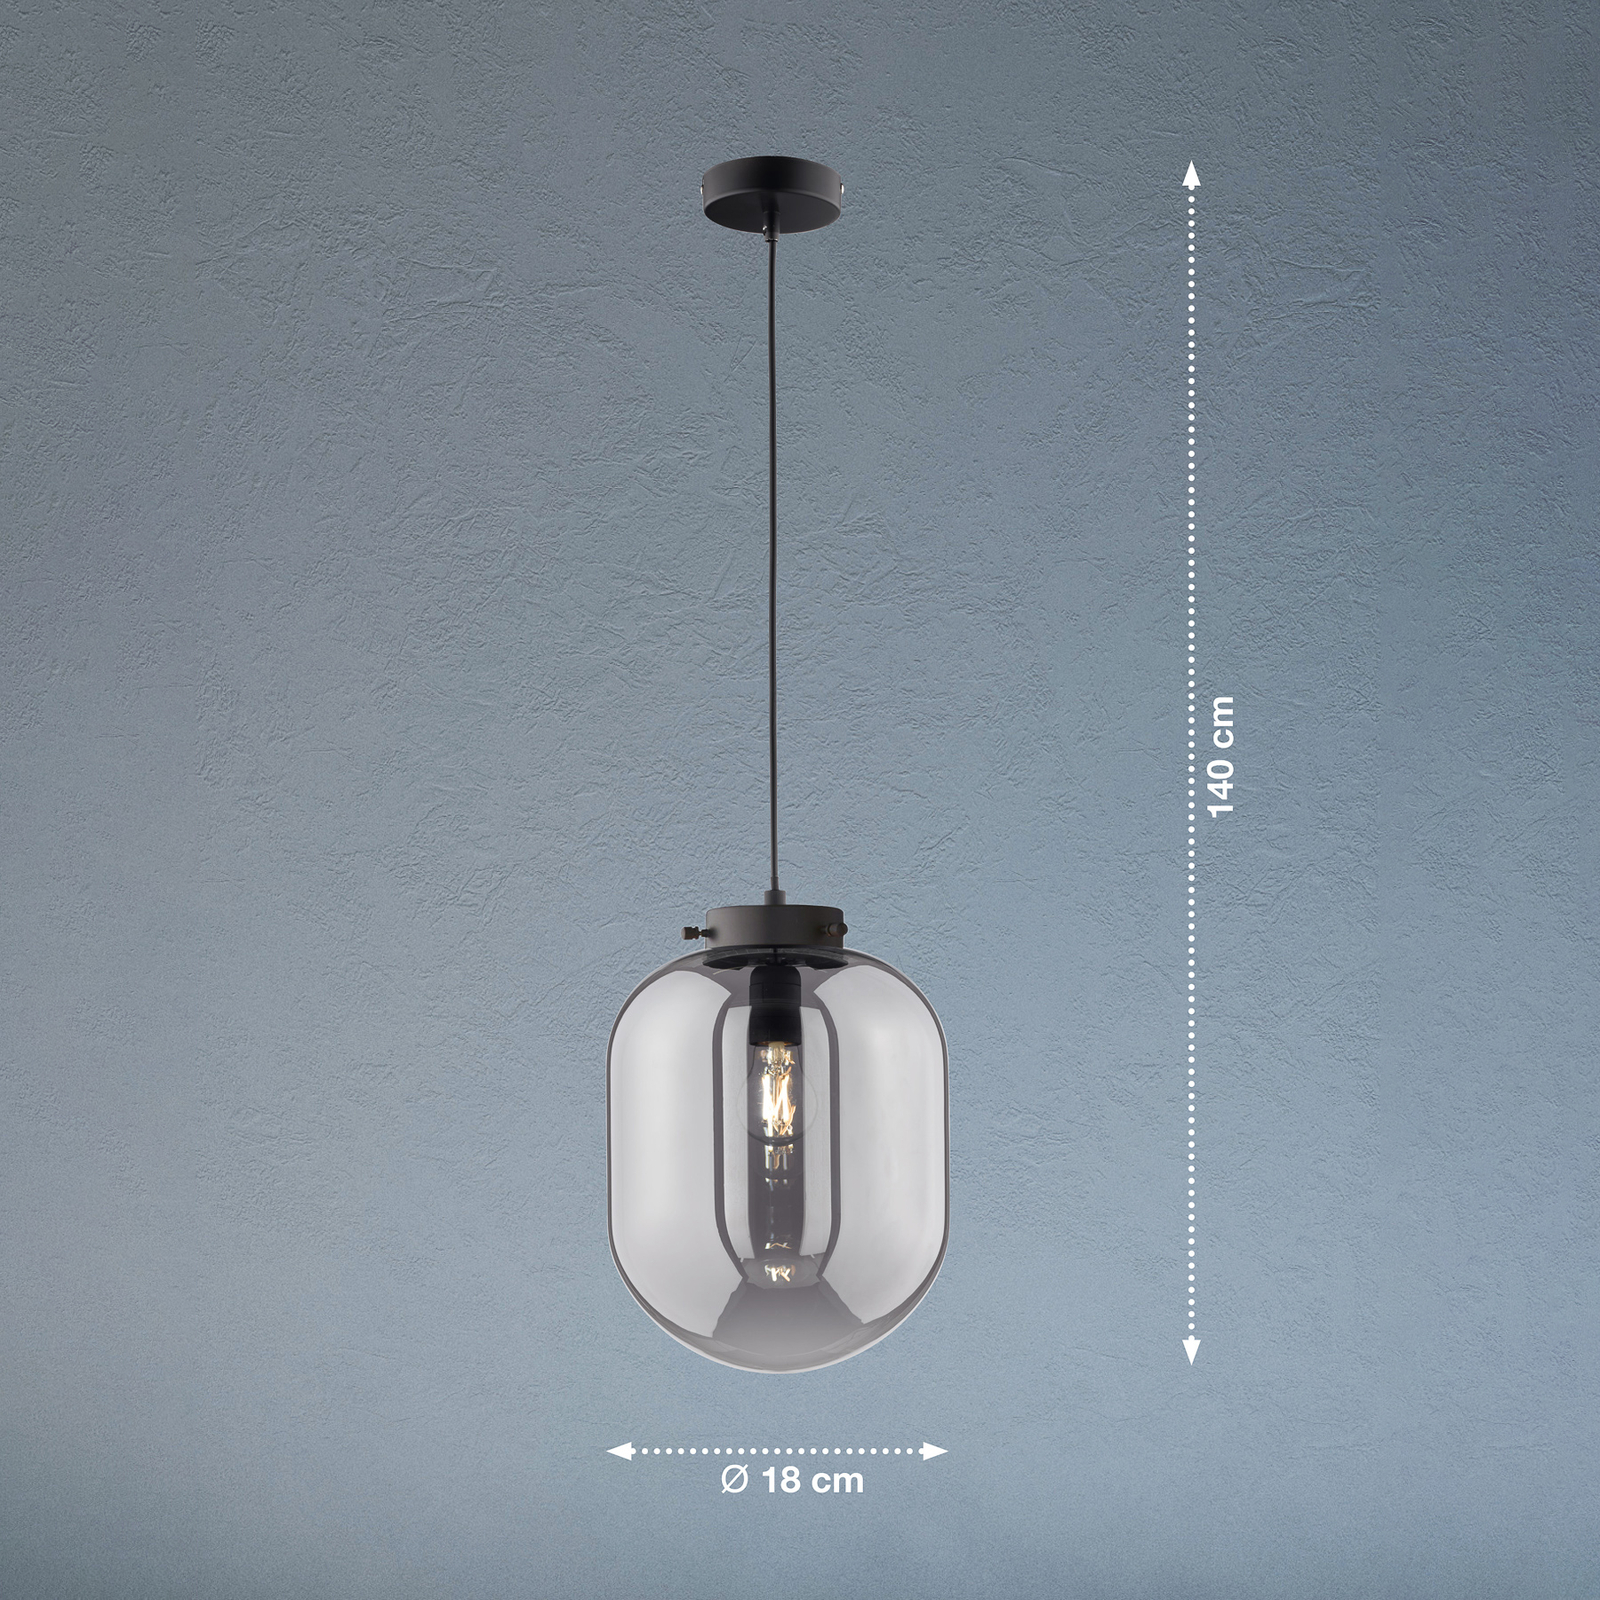 Regi pendant light, one-bulb, Ø 18 cm